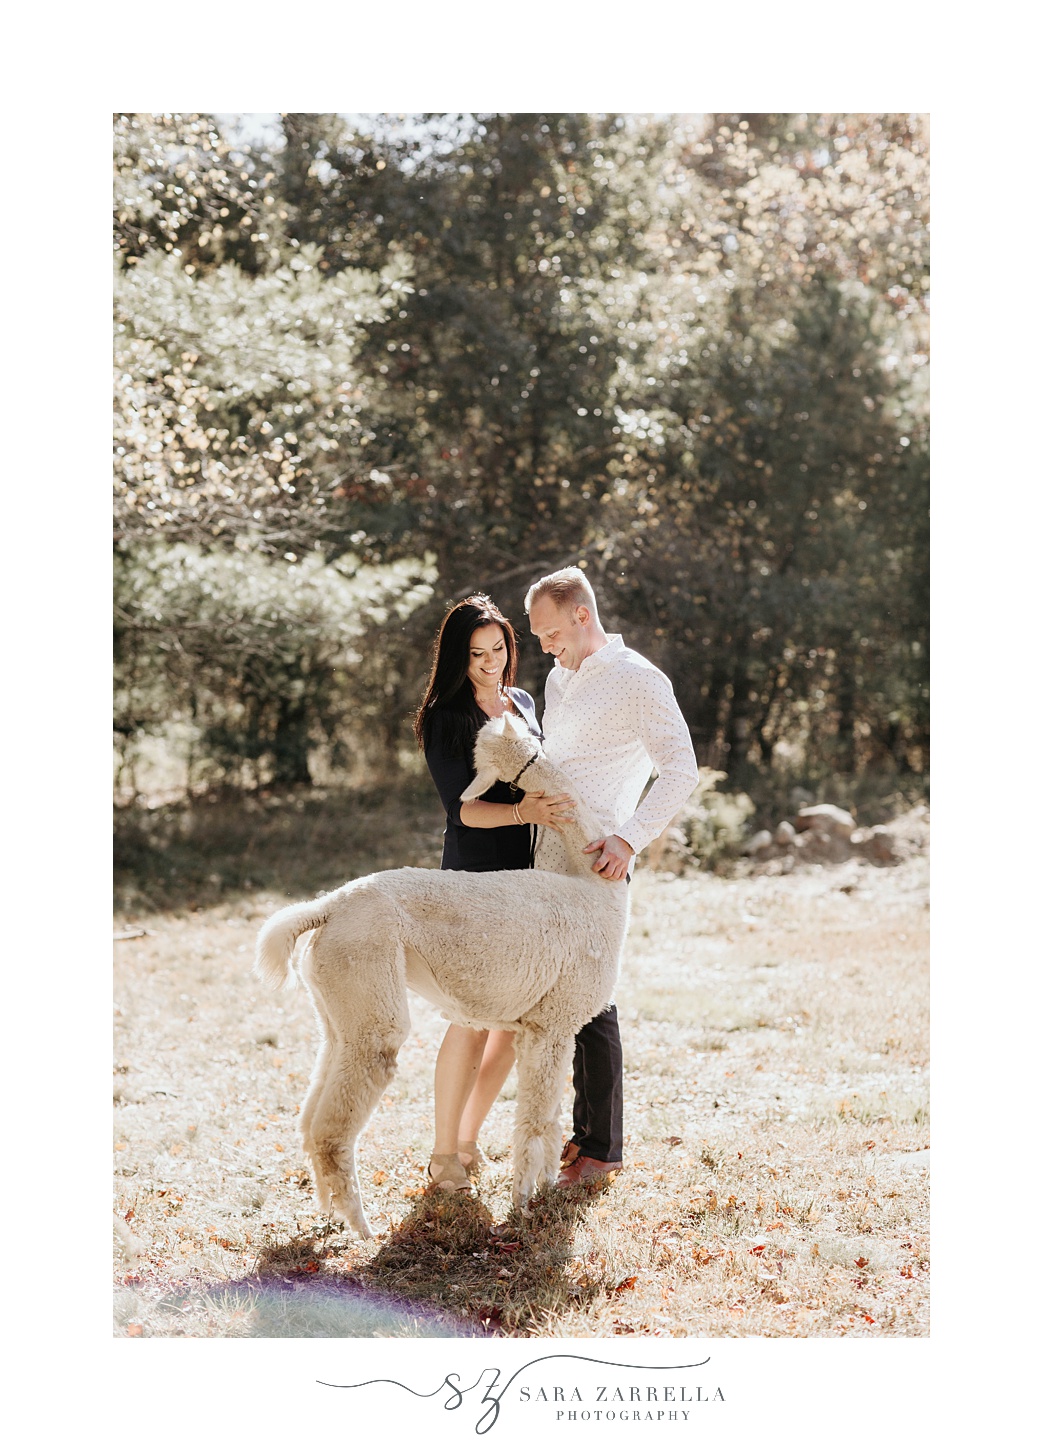 engaged couple pets llama during engagement photos